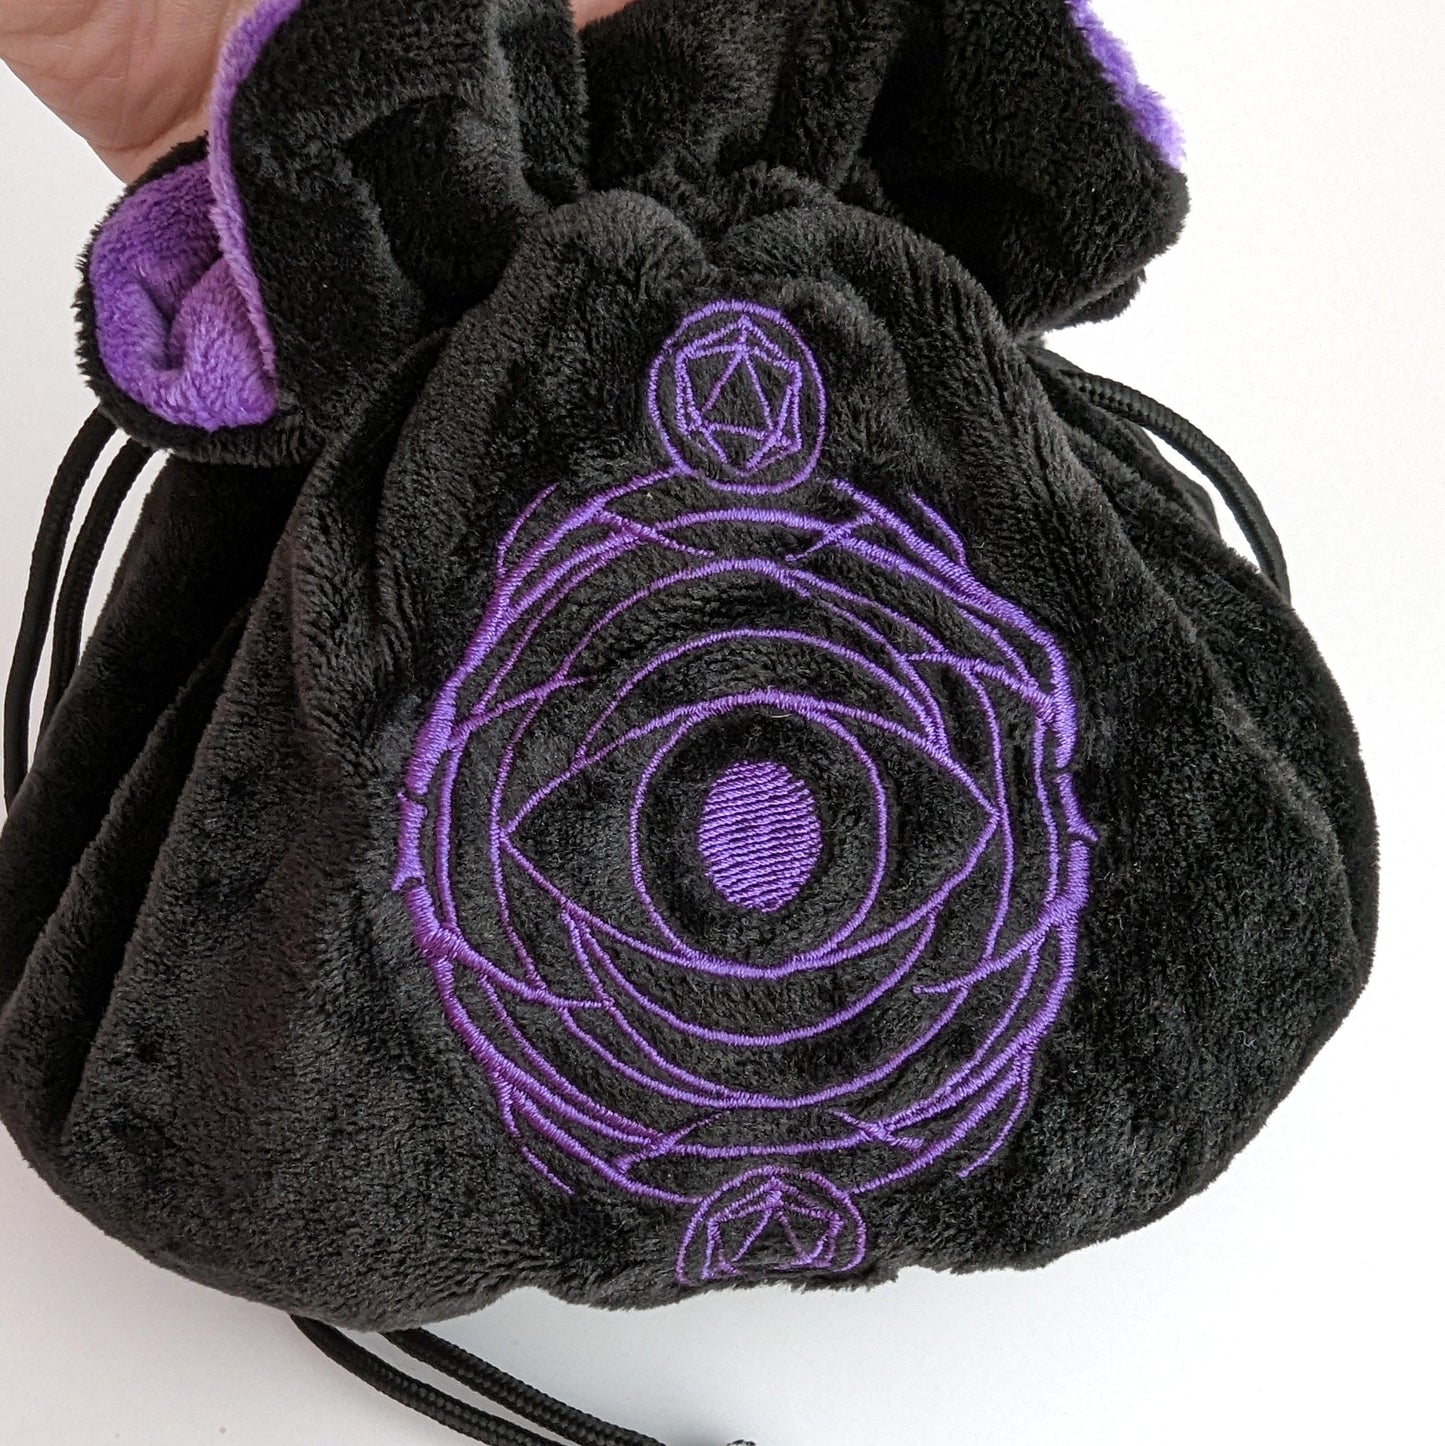 Warlock inspired multi pocket large dice bag in black and purple